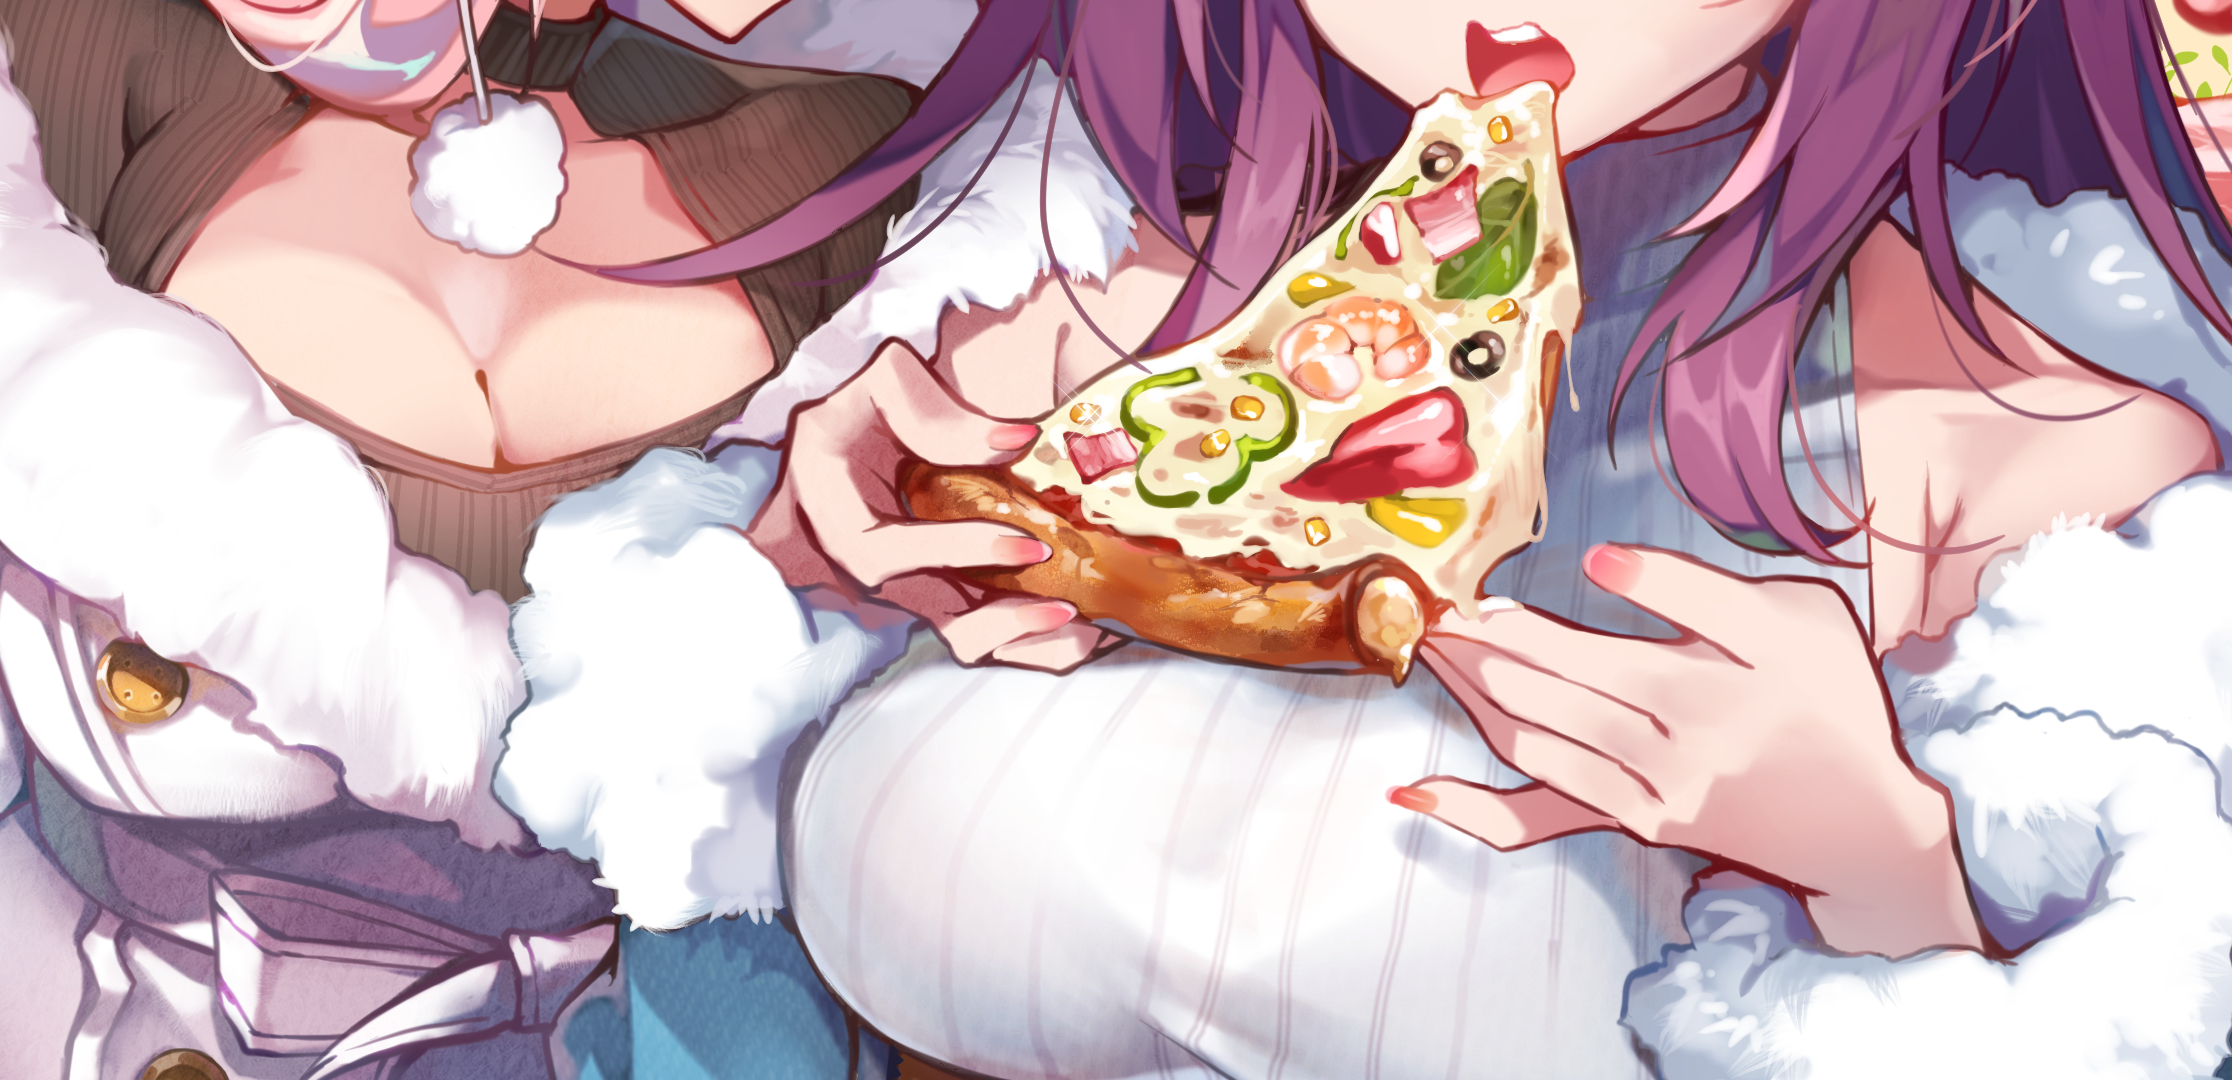 Anime 2232x1080 anime anime girls digital art artwork 2D portrait display food anime girls eating pizza Kanola U cropped Fate series Fate/Grand Order Scathach Medb (Fate/Grand Order ) big boobs cleavage